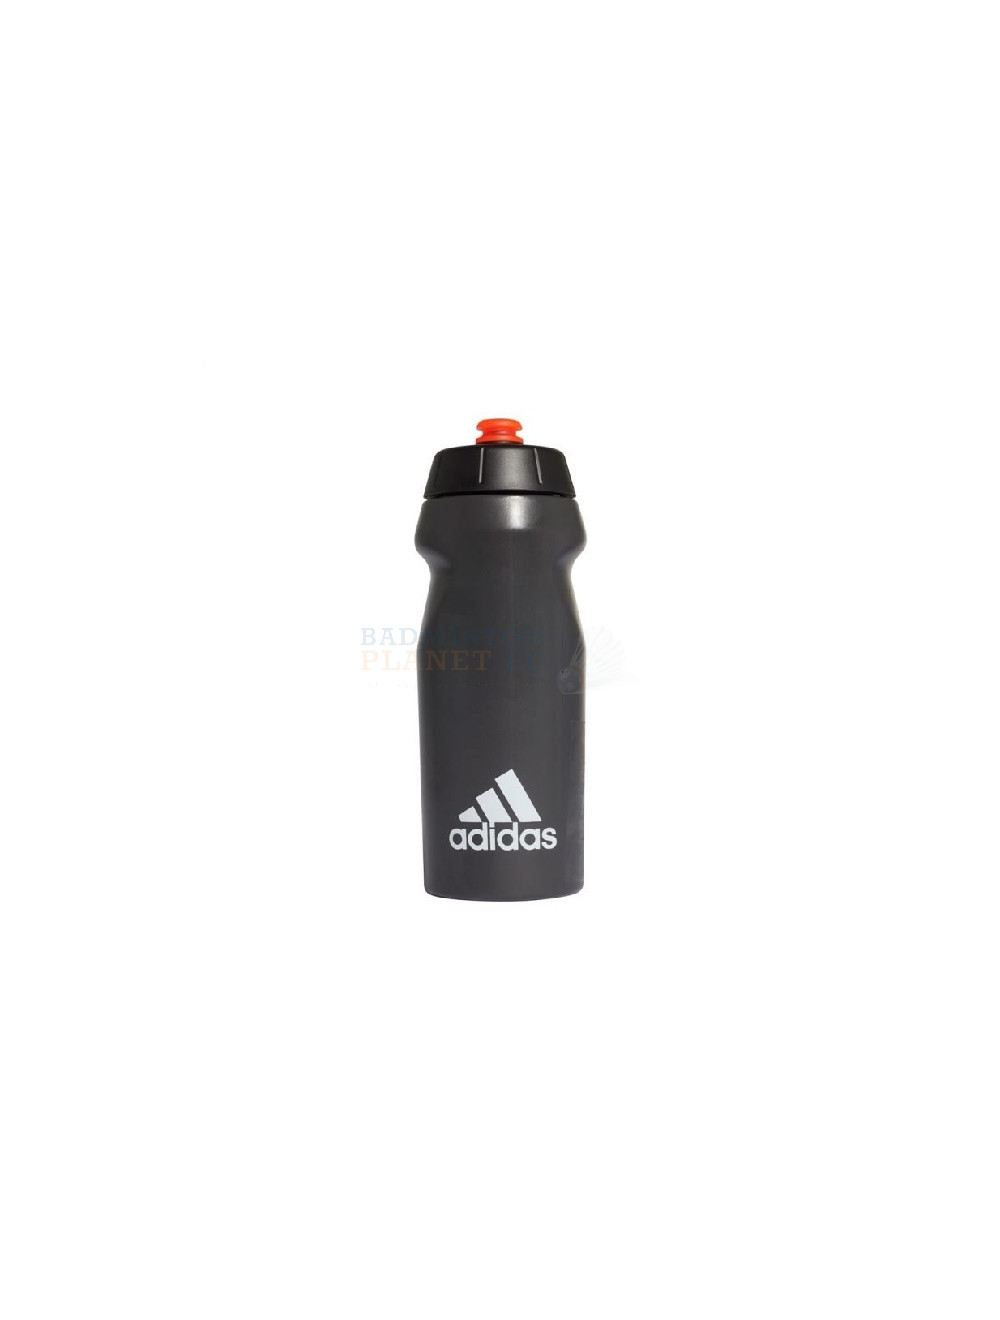 adidas White 0.5L Water Bottle